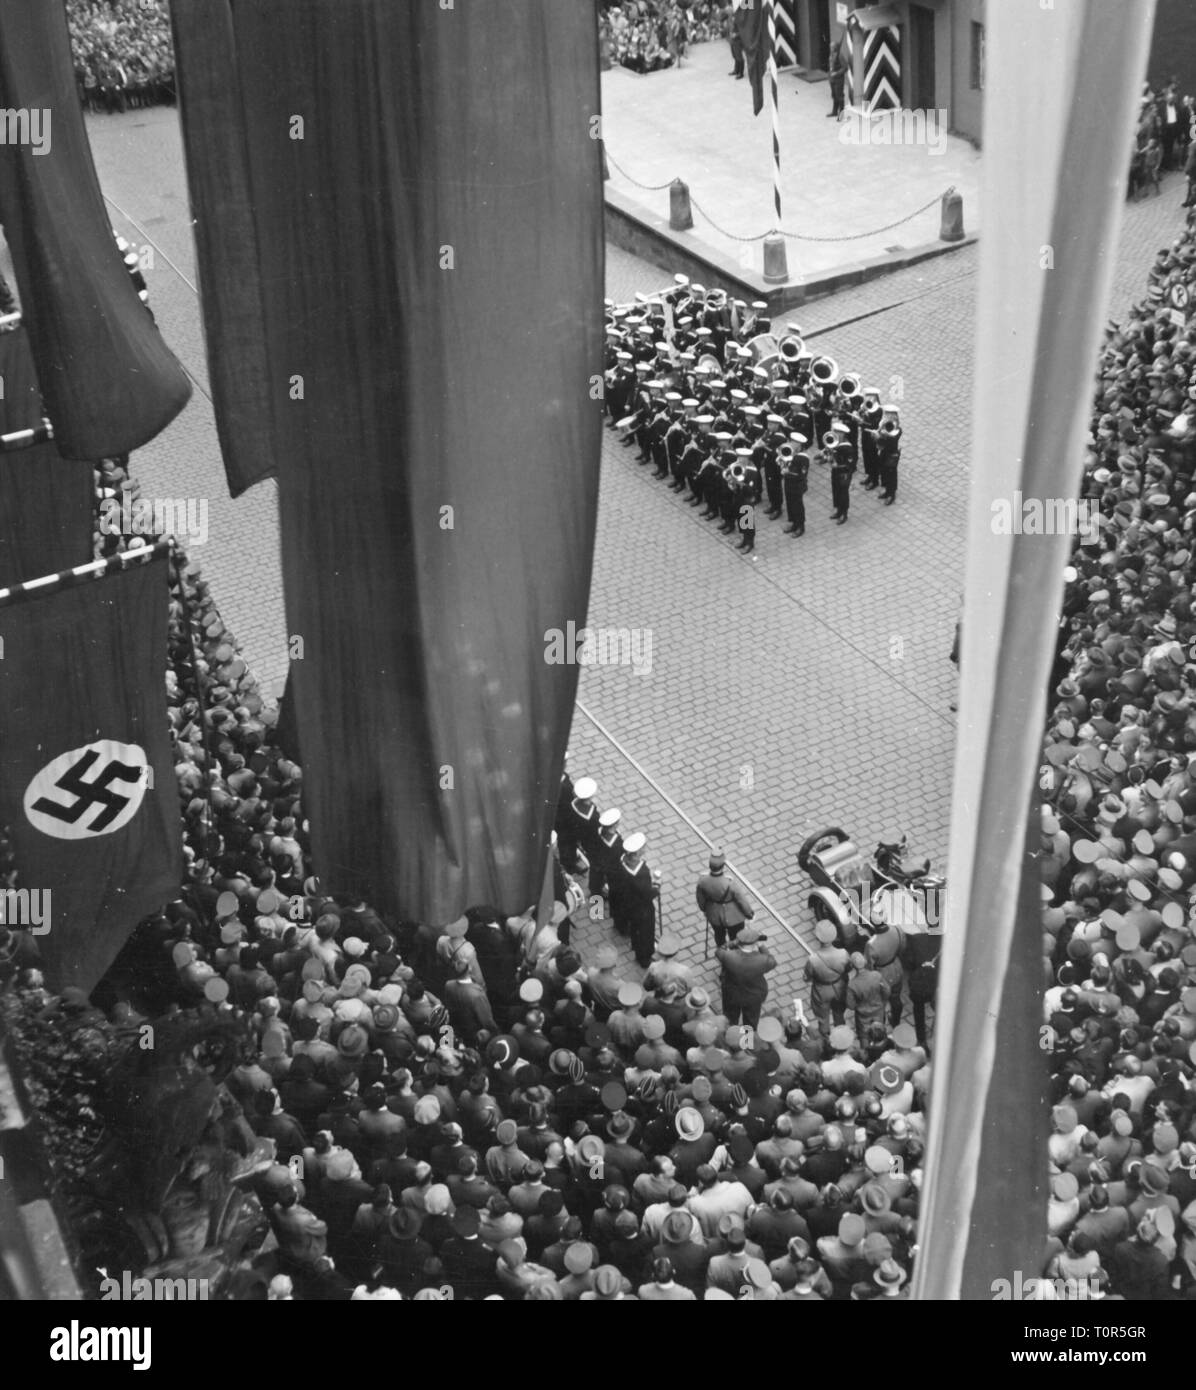 Il Nazionalsocialismo, raduni di Norimberga, 'Reichsparteitag der Arbeit" ("Congresso del lavoro "), Norimberga, 6.9.1937 - 13.9.1937, Additional-Rights-Clearance-Info-Not-Available Foto Stock